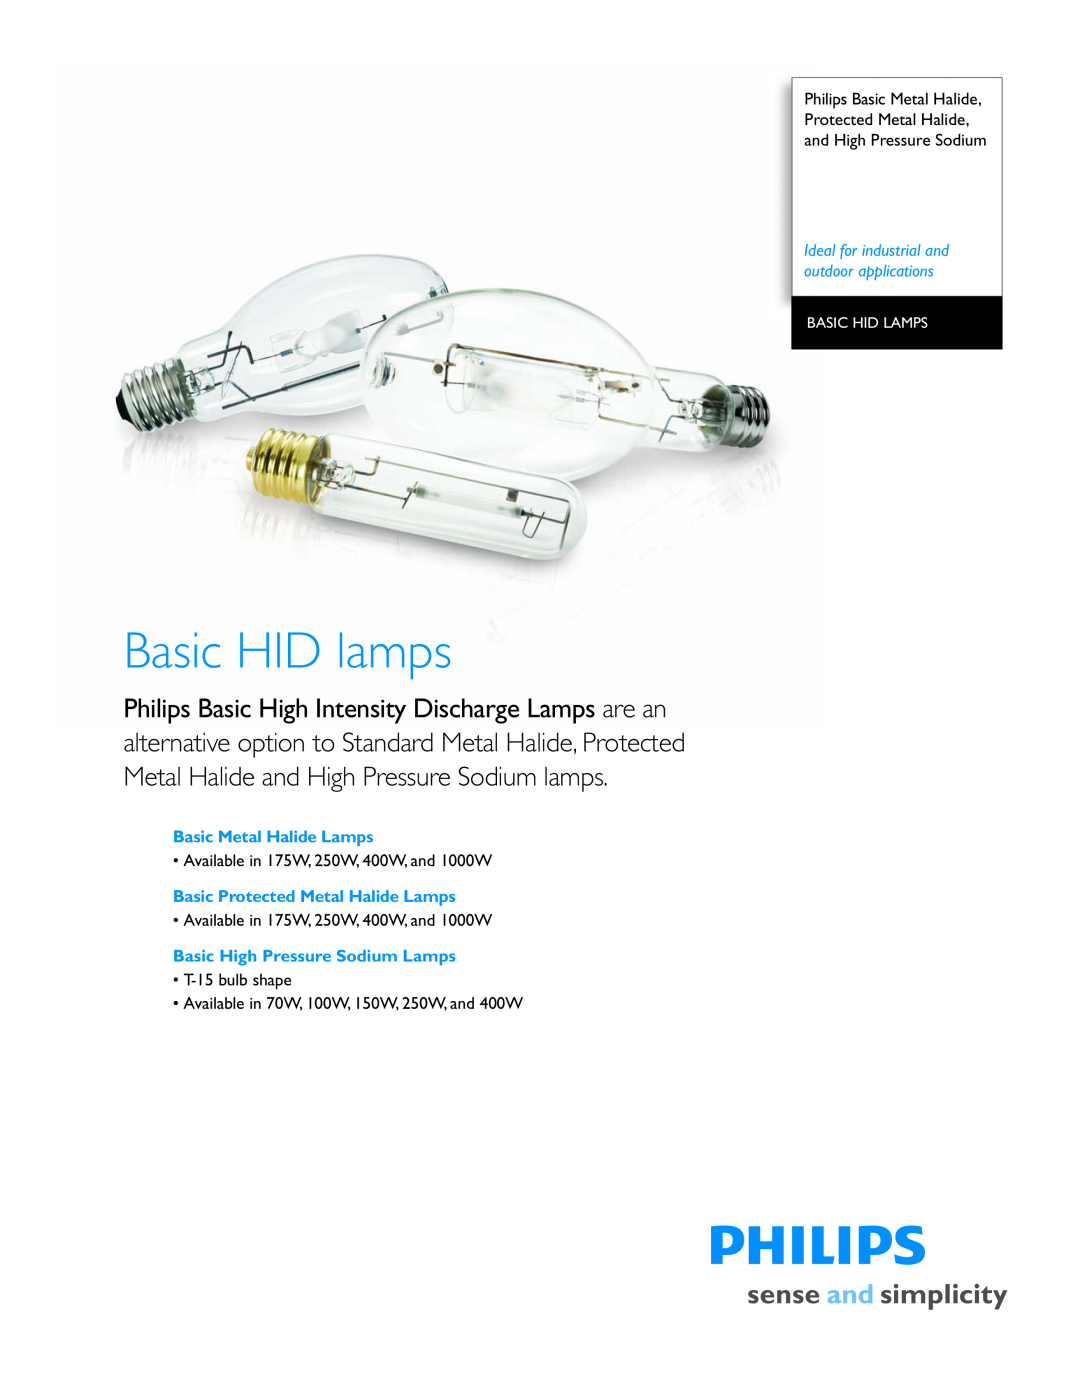 Philips Basic HID Lamp manual Basic HID lamps, Basic Metal Halide Lamps, Basic Protected Metal Halide Lamps 